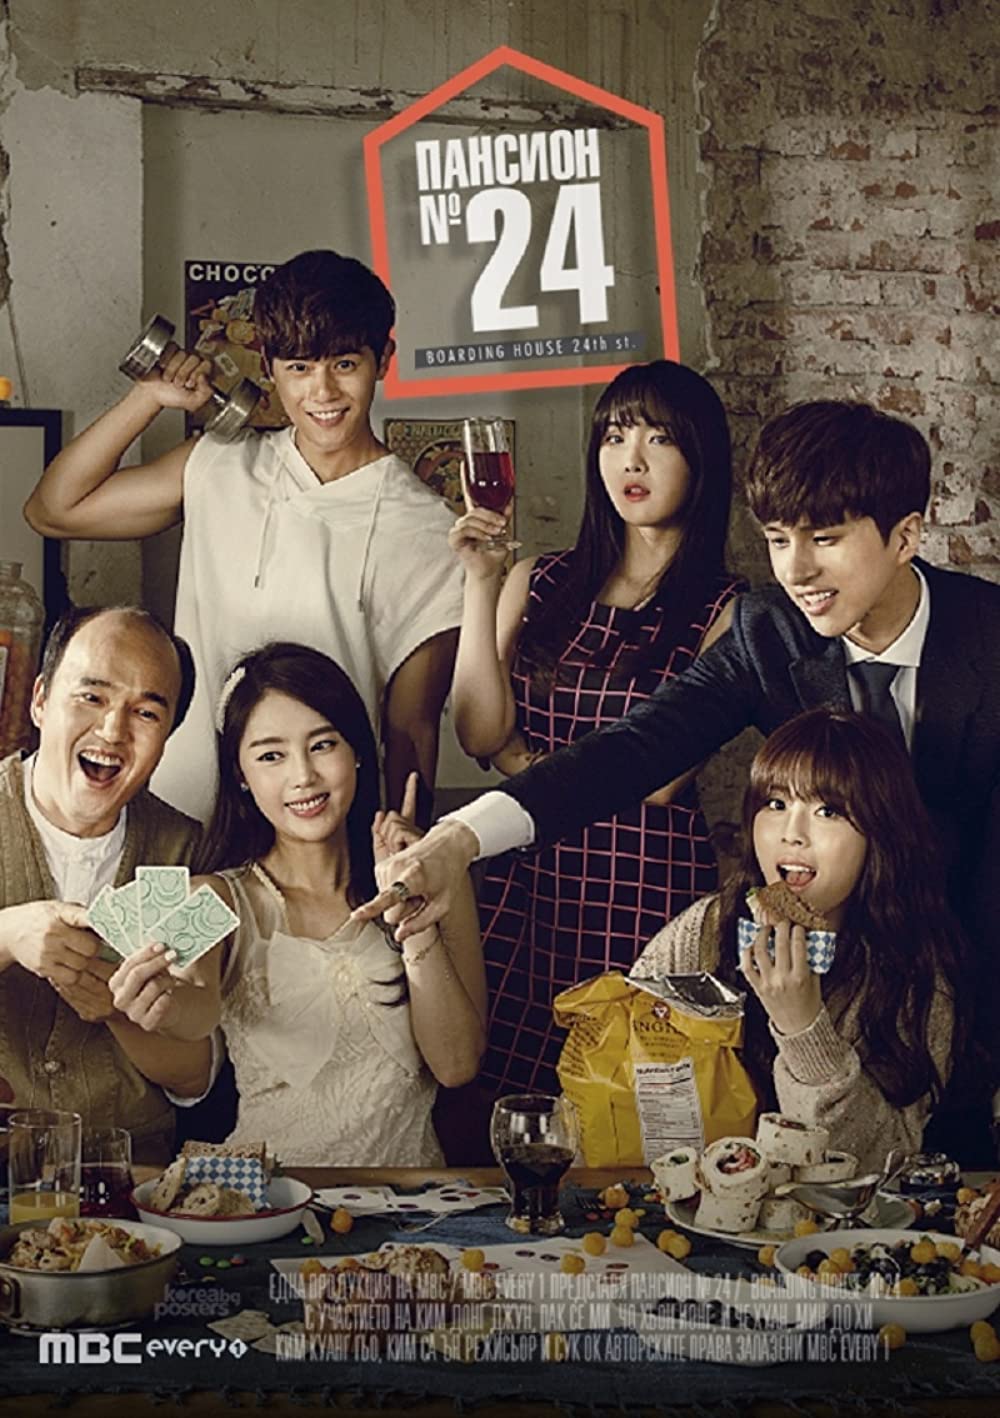 15 Drama Korea wajib tonton tanpa keraguan, ada banyak genre & cerita